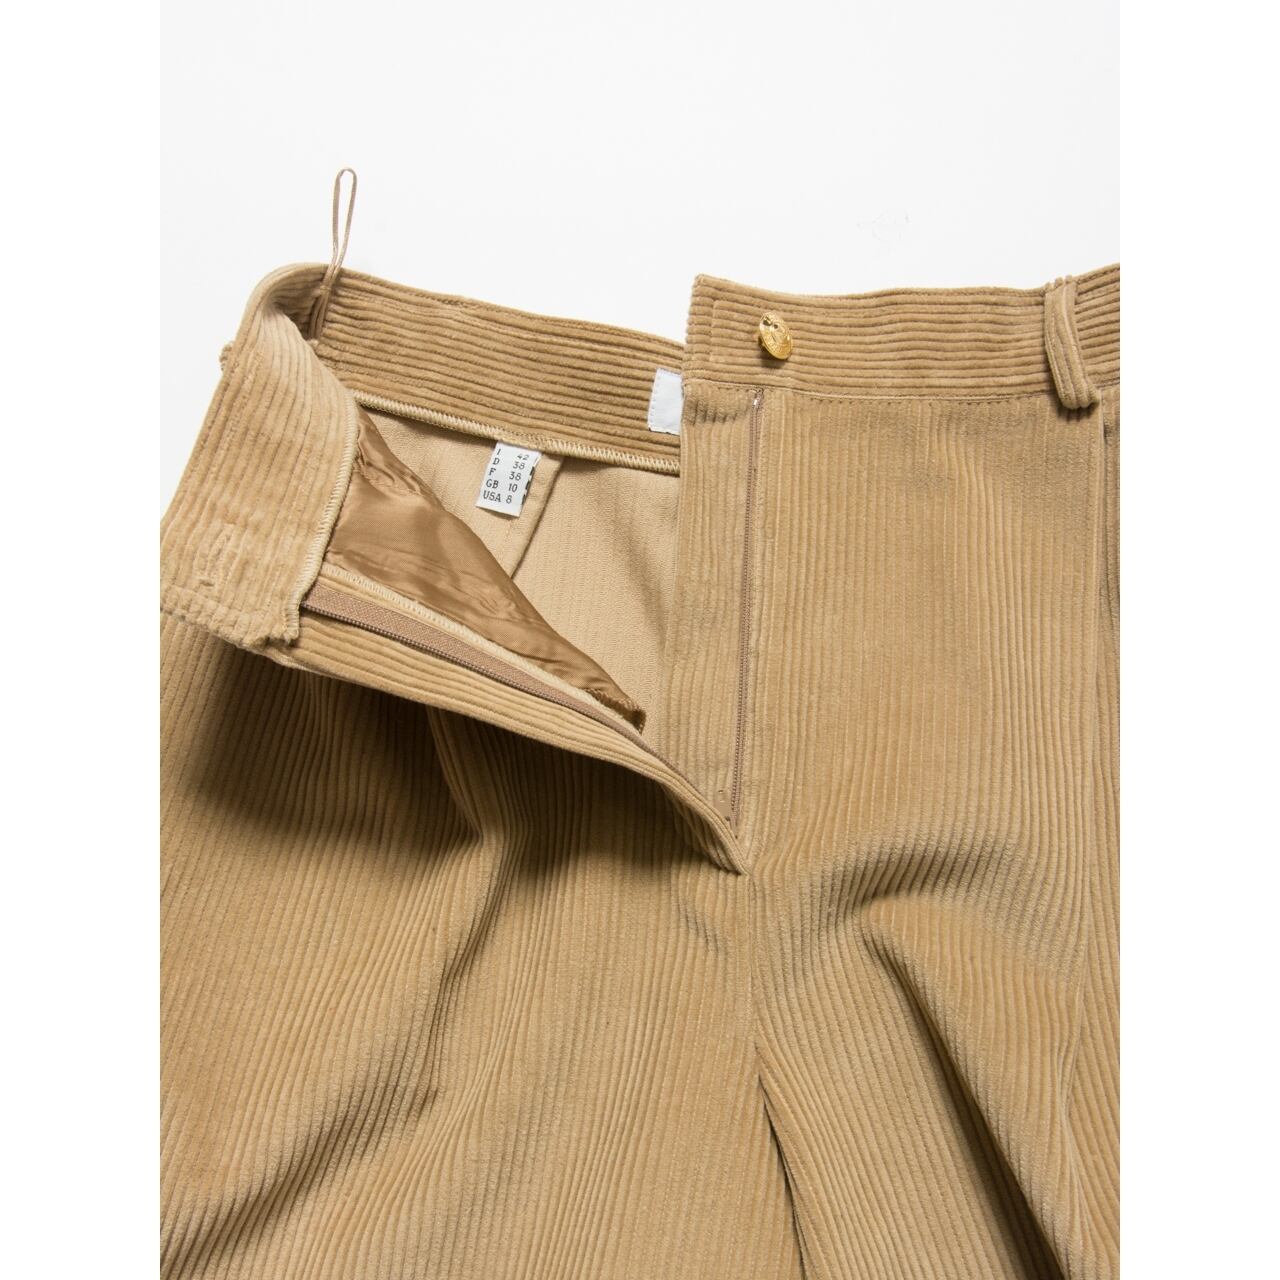 【FERRETTI】Made in Italy corduroy wide shorts（フェレッティ イタリア製 コーデュロイワイドショーツ）3b